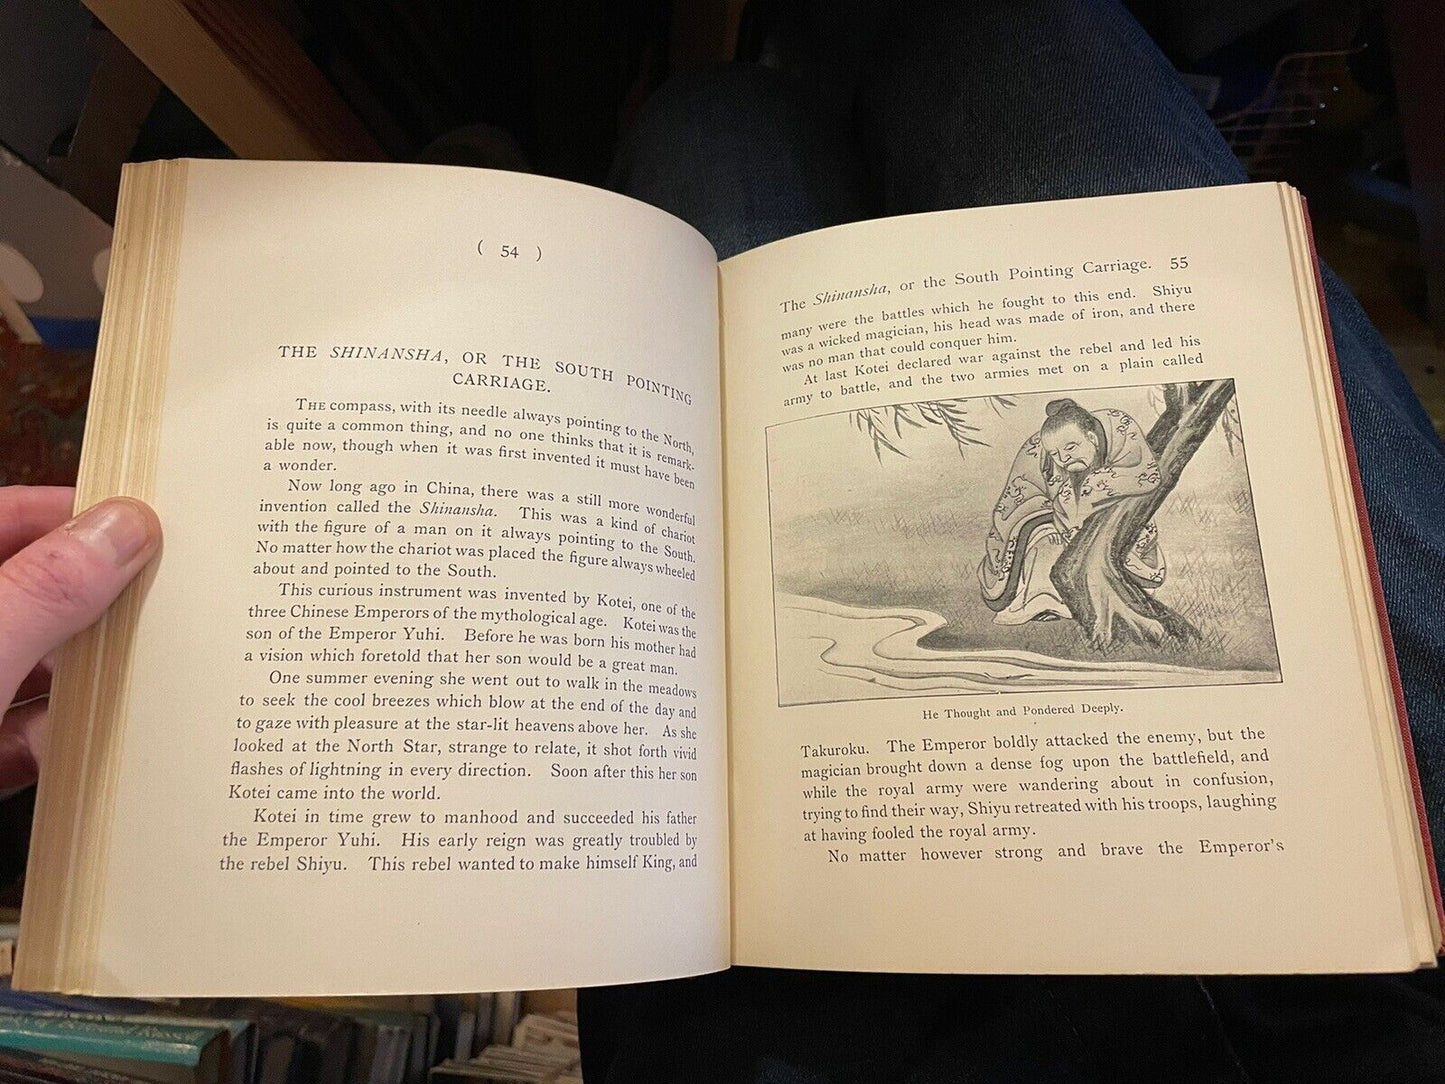 1903 The Japanese Fairy Book : Yei Theodora Ozaki : Illustrated Fairy Tales